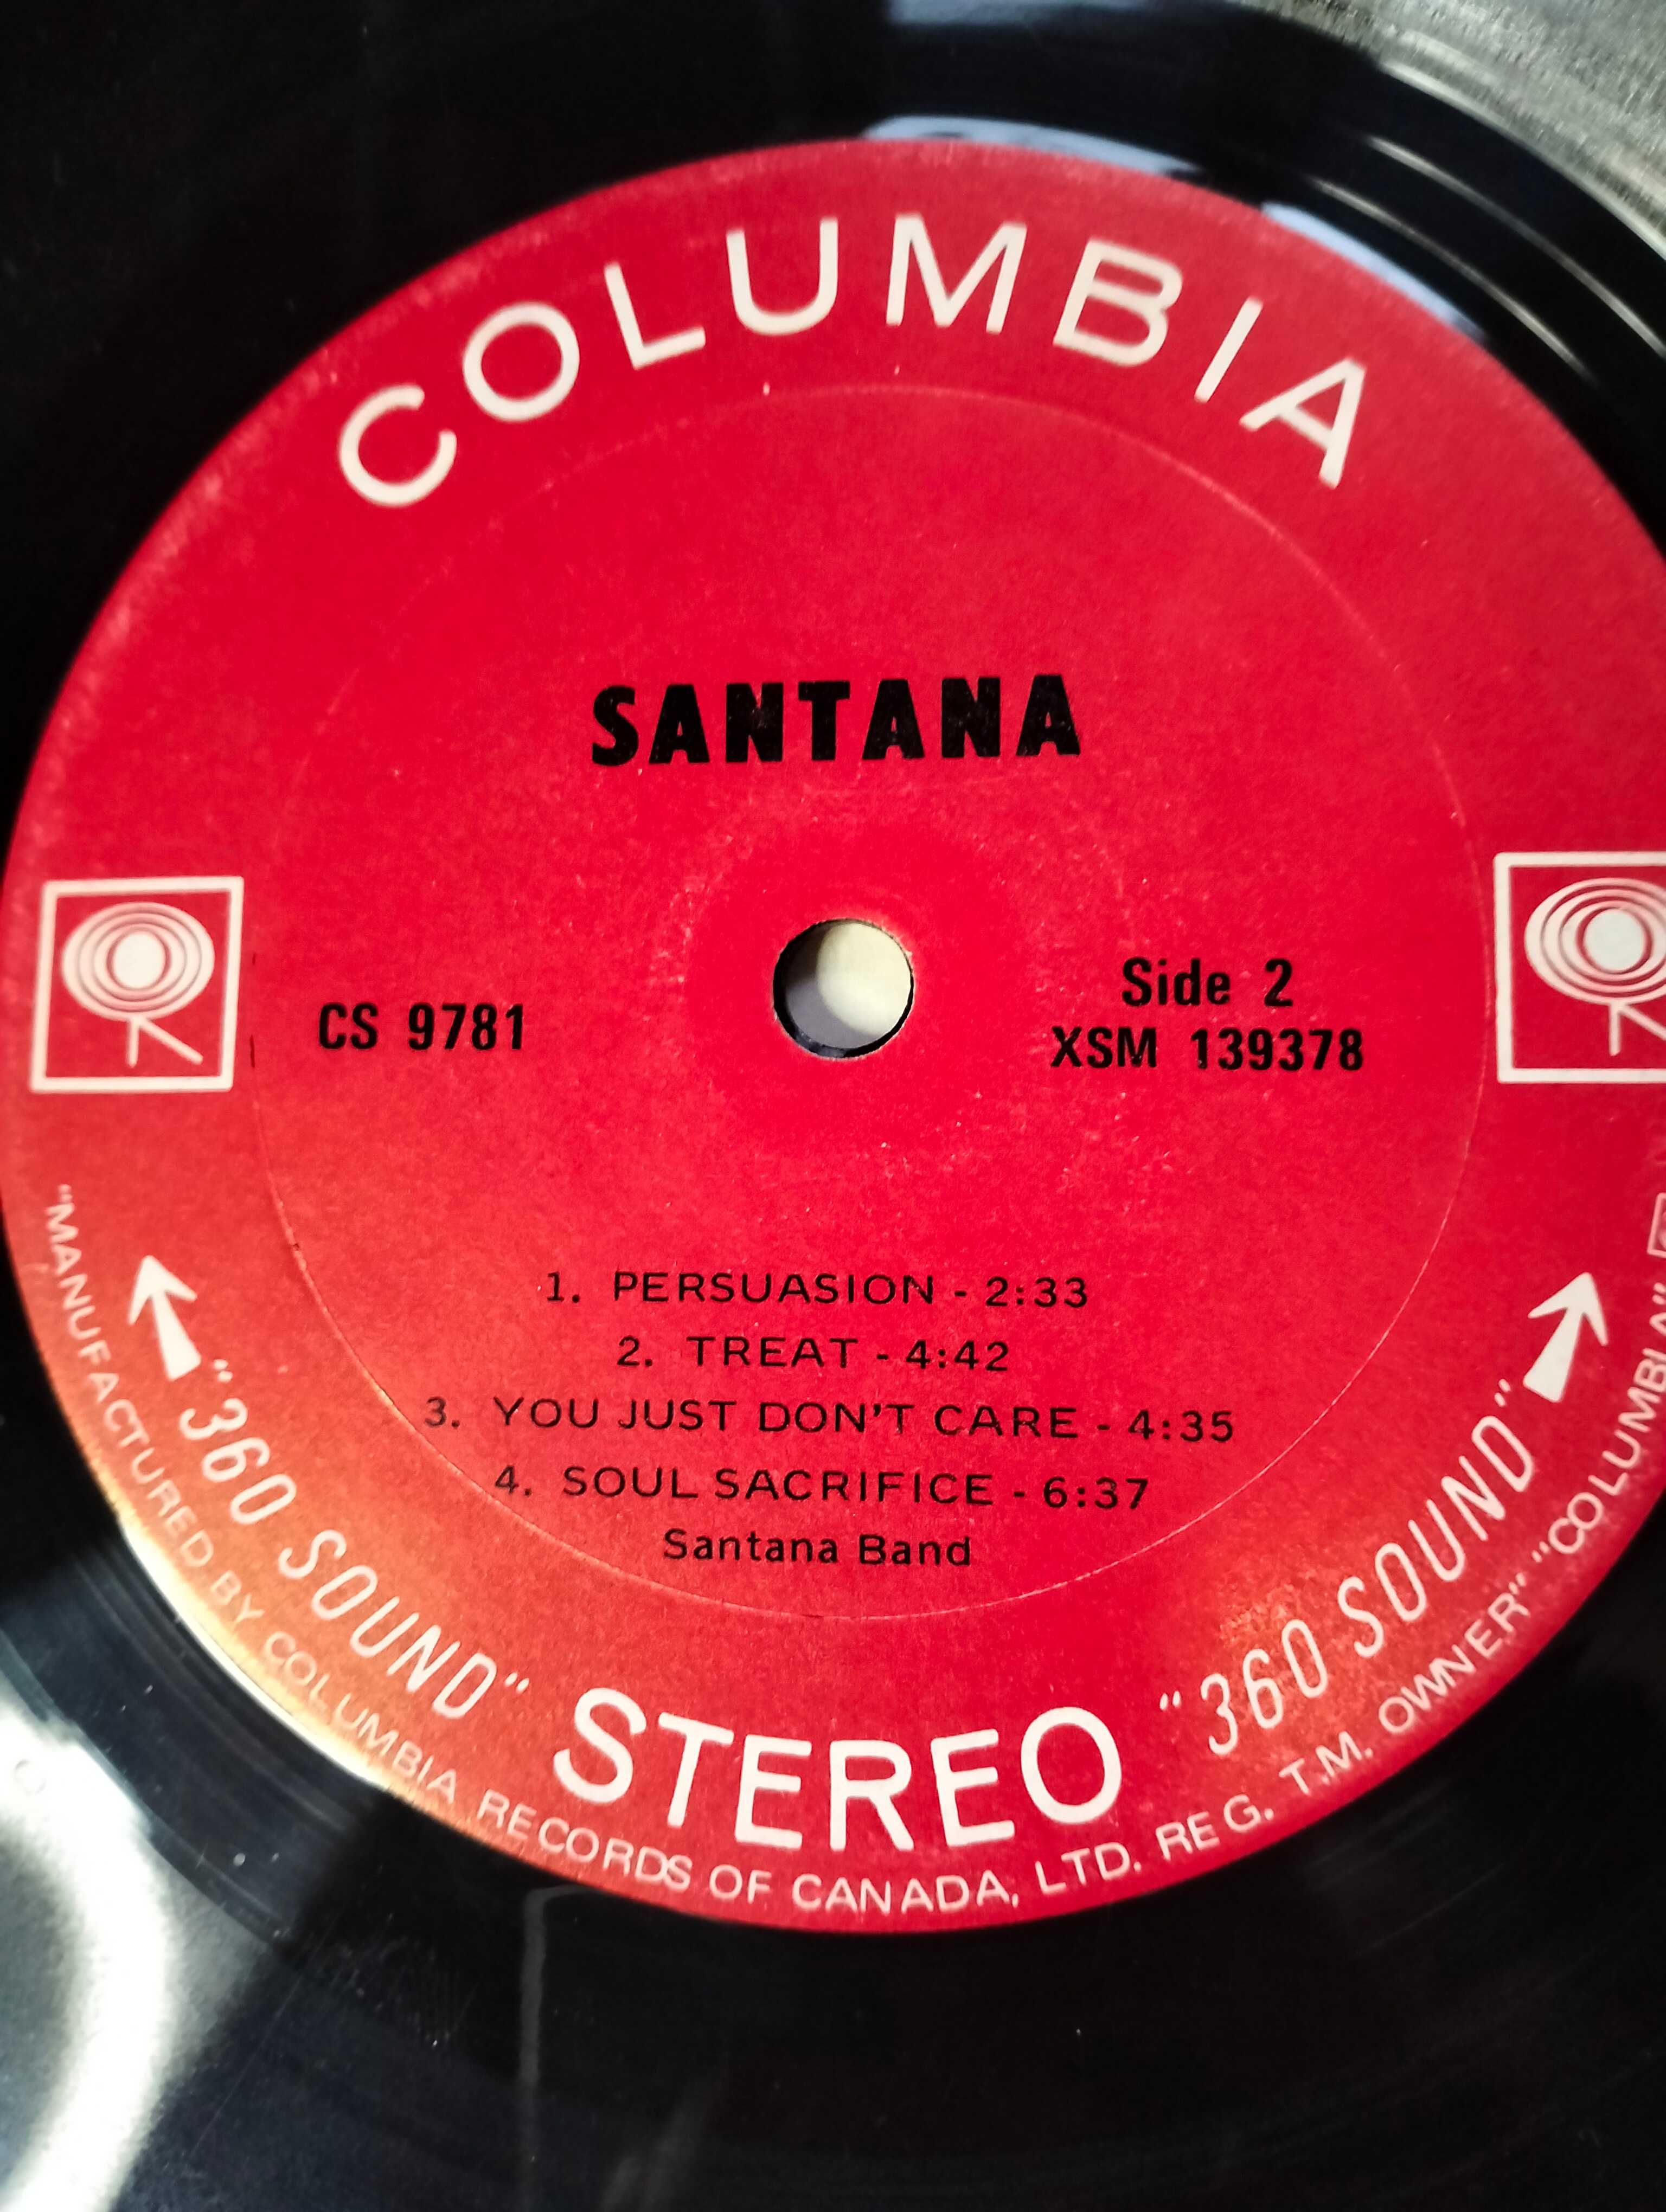 Santana Santana Winyl Lp Columbia Records of Canada Lp